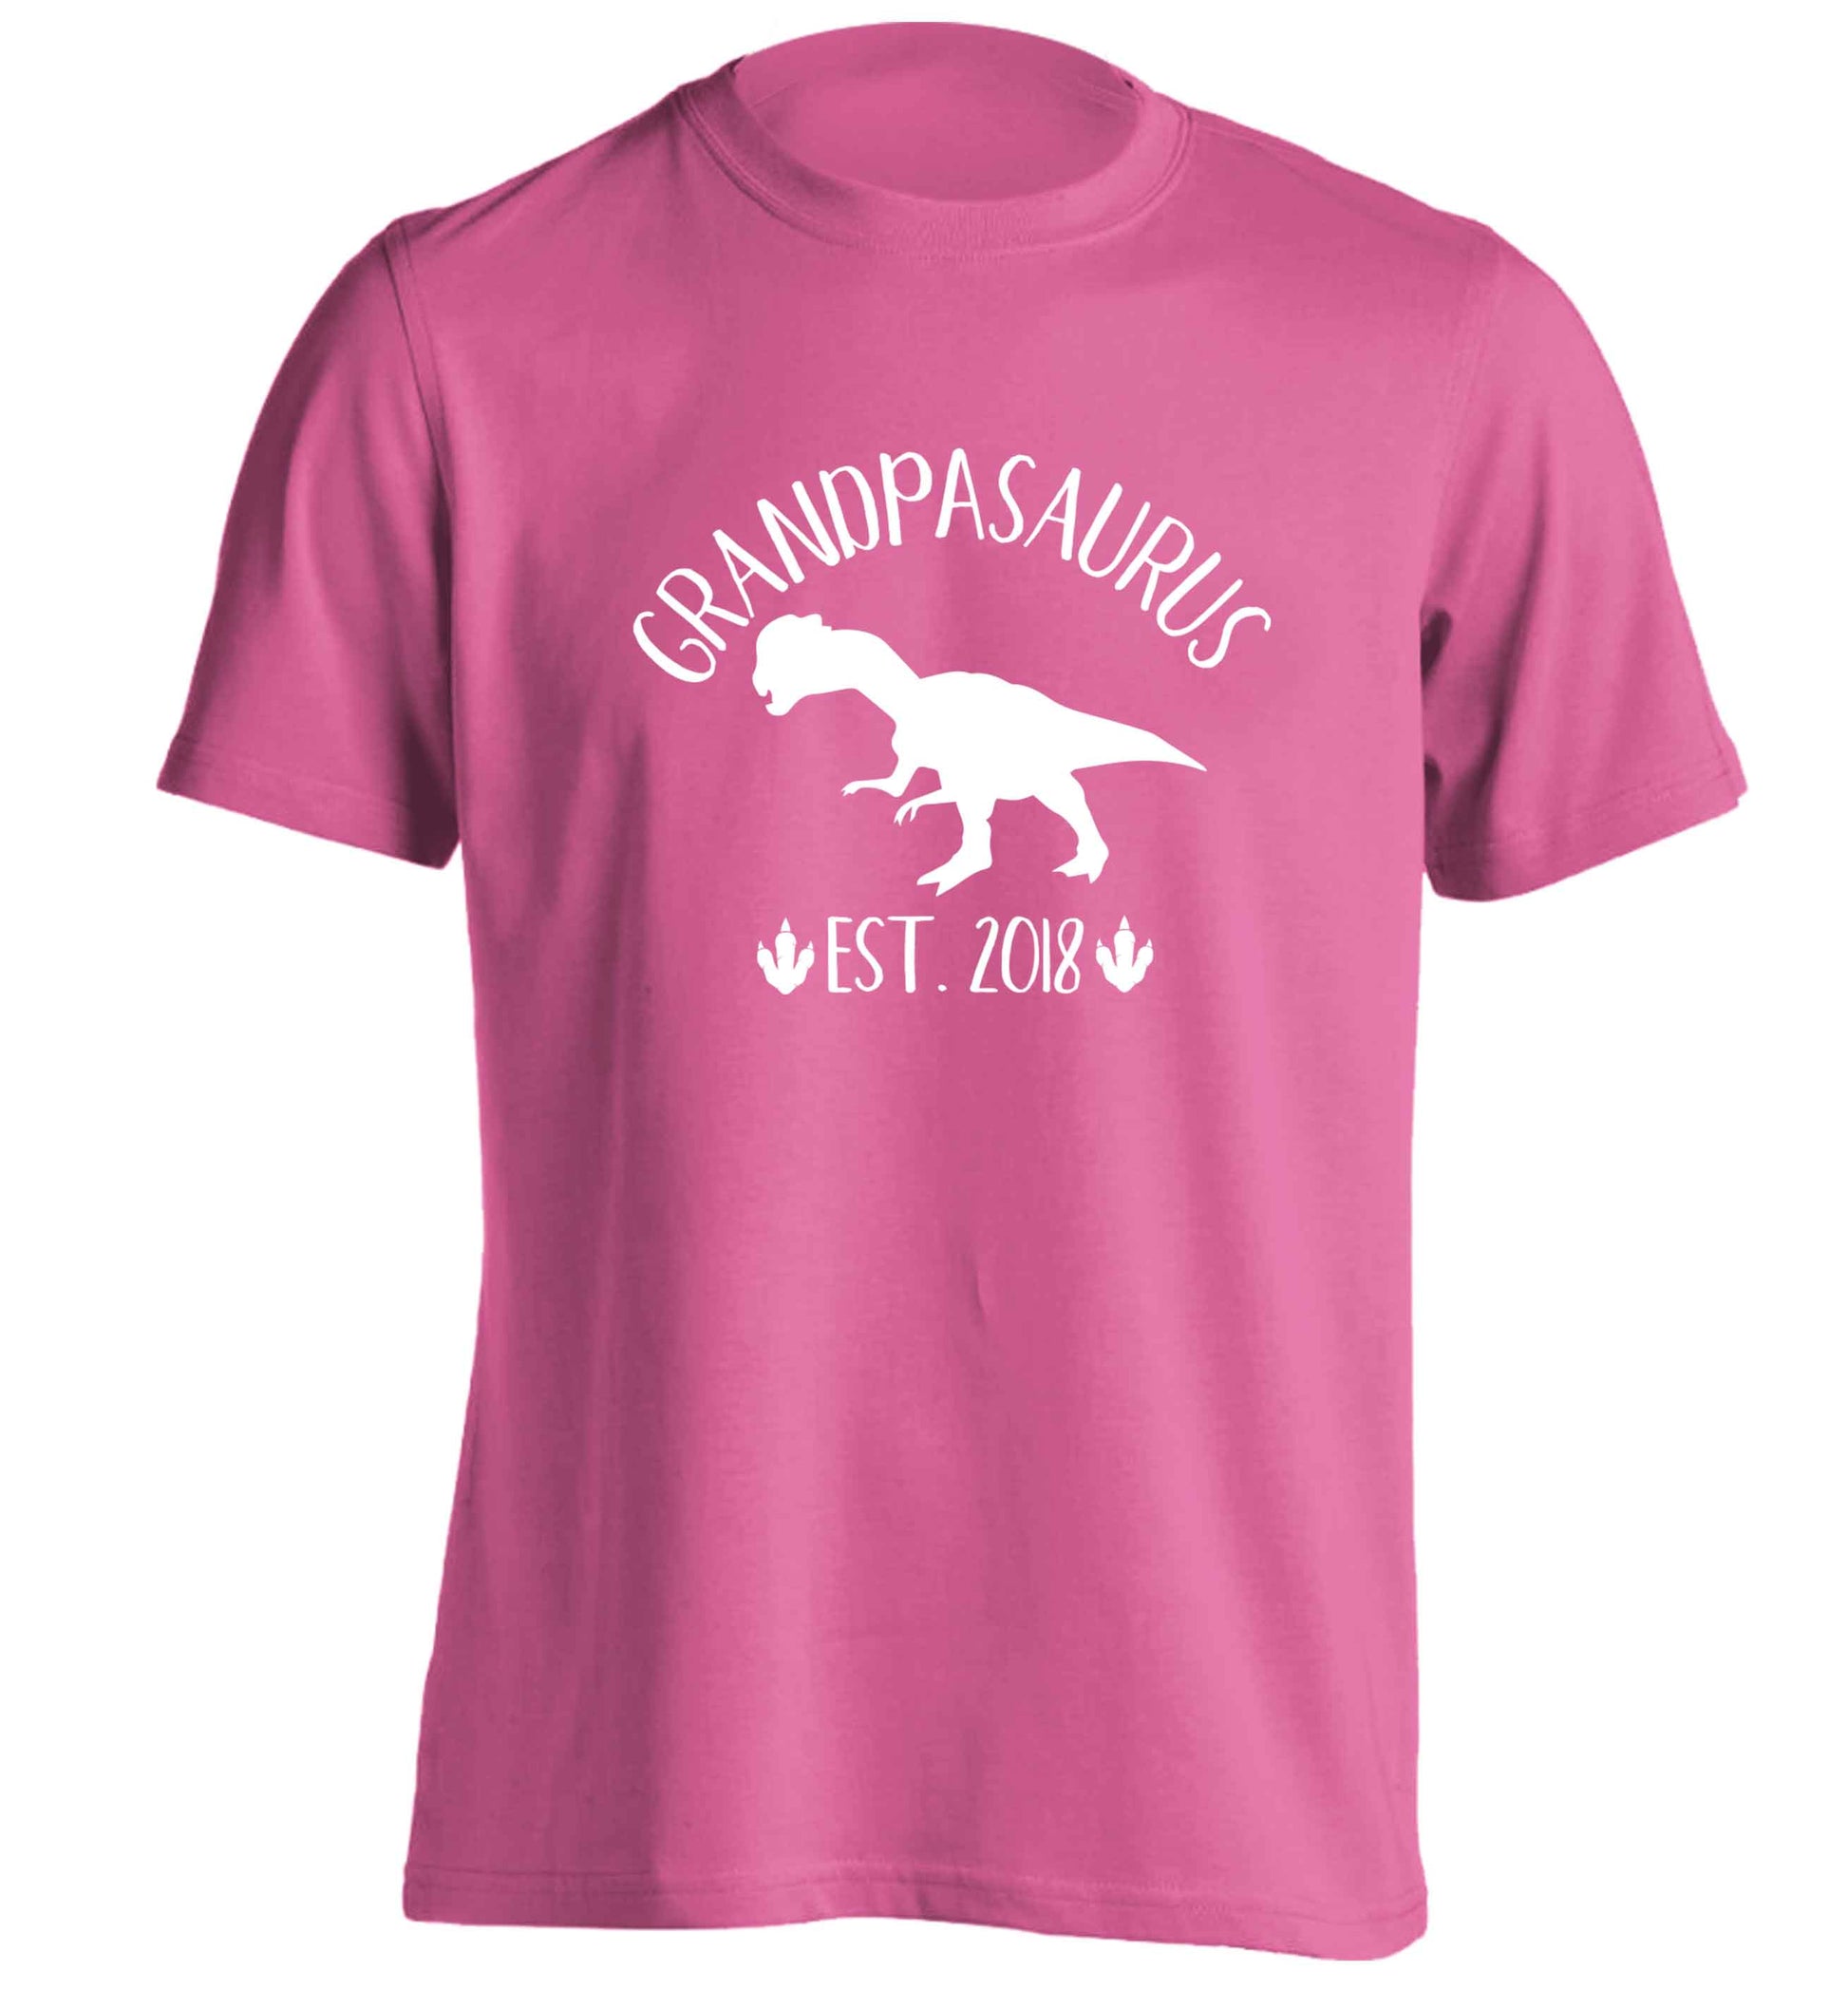 Personalised grandpasaurus since (custom date) adults unisex pink Tshirt 2XL